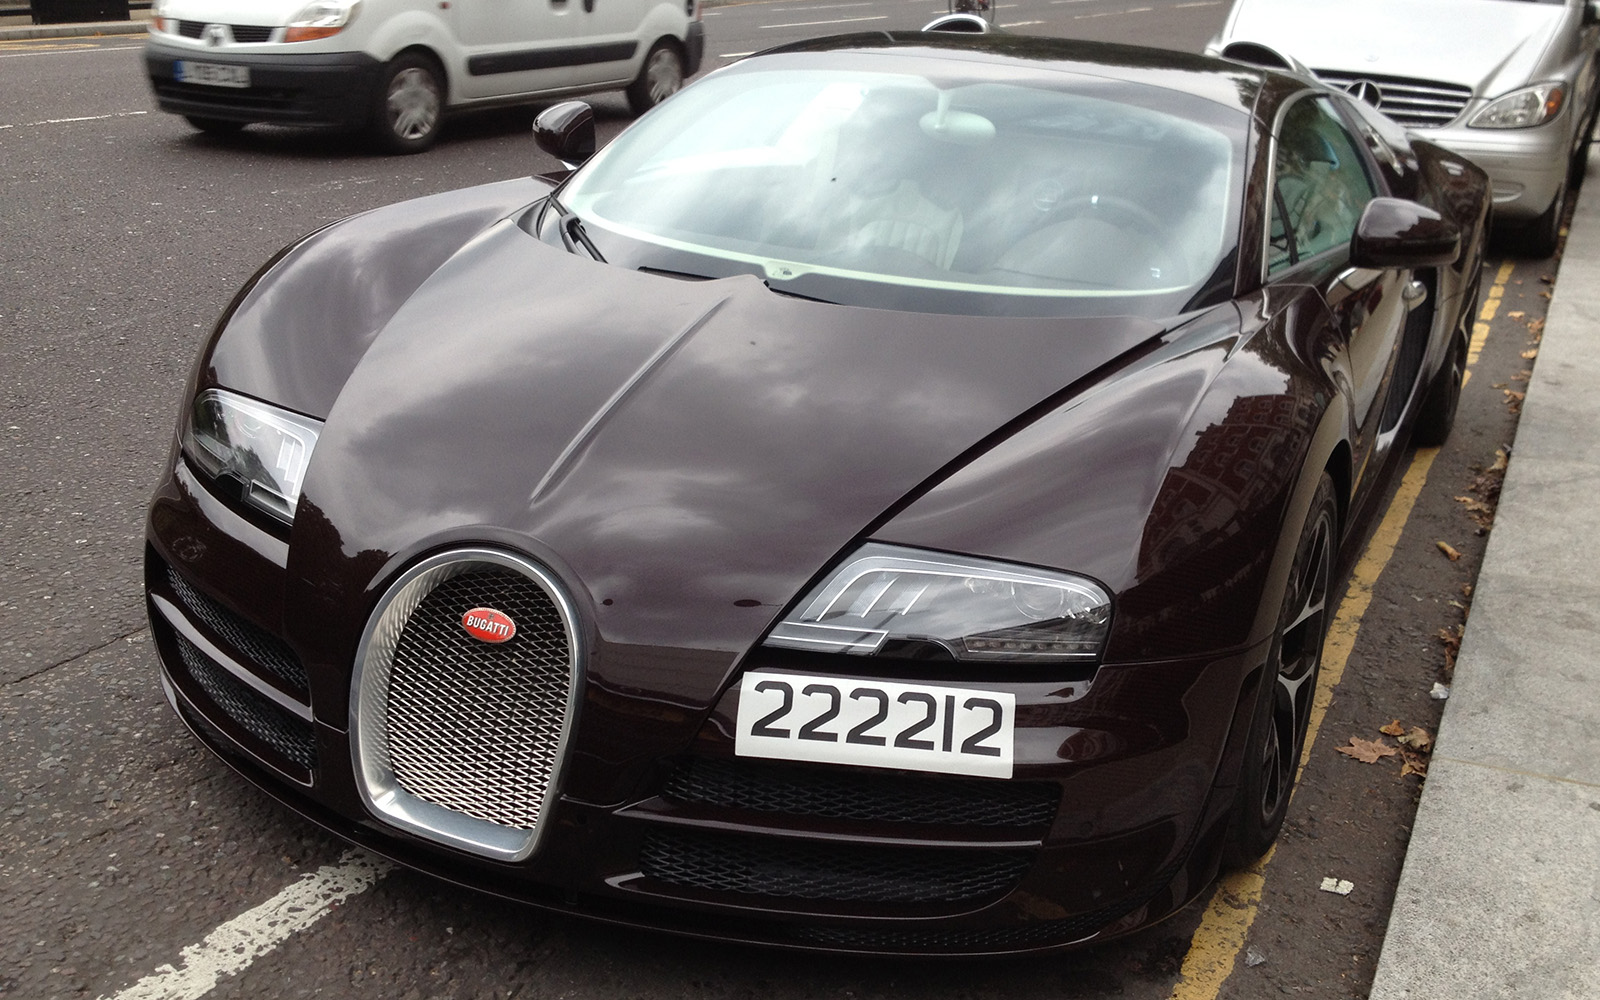 Bugatti photo in Kensington High Street